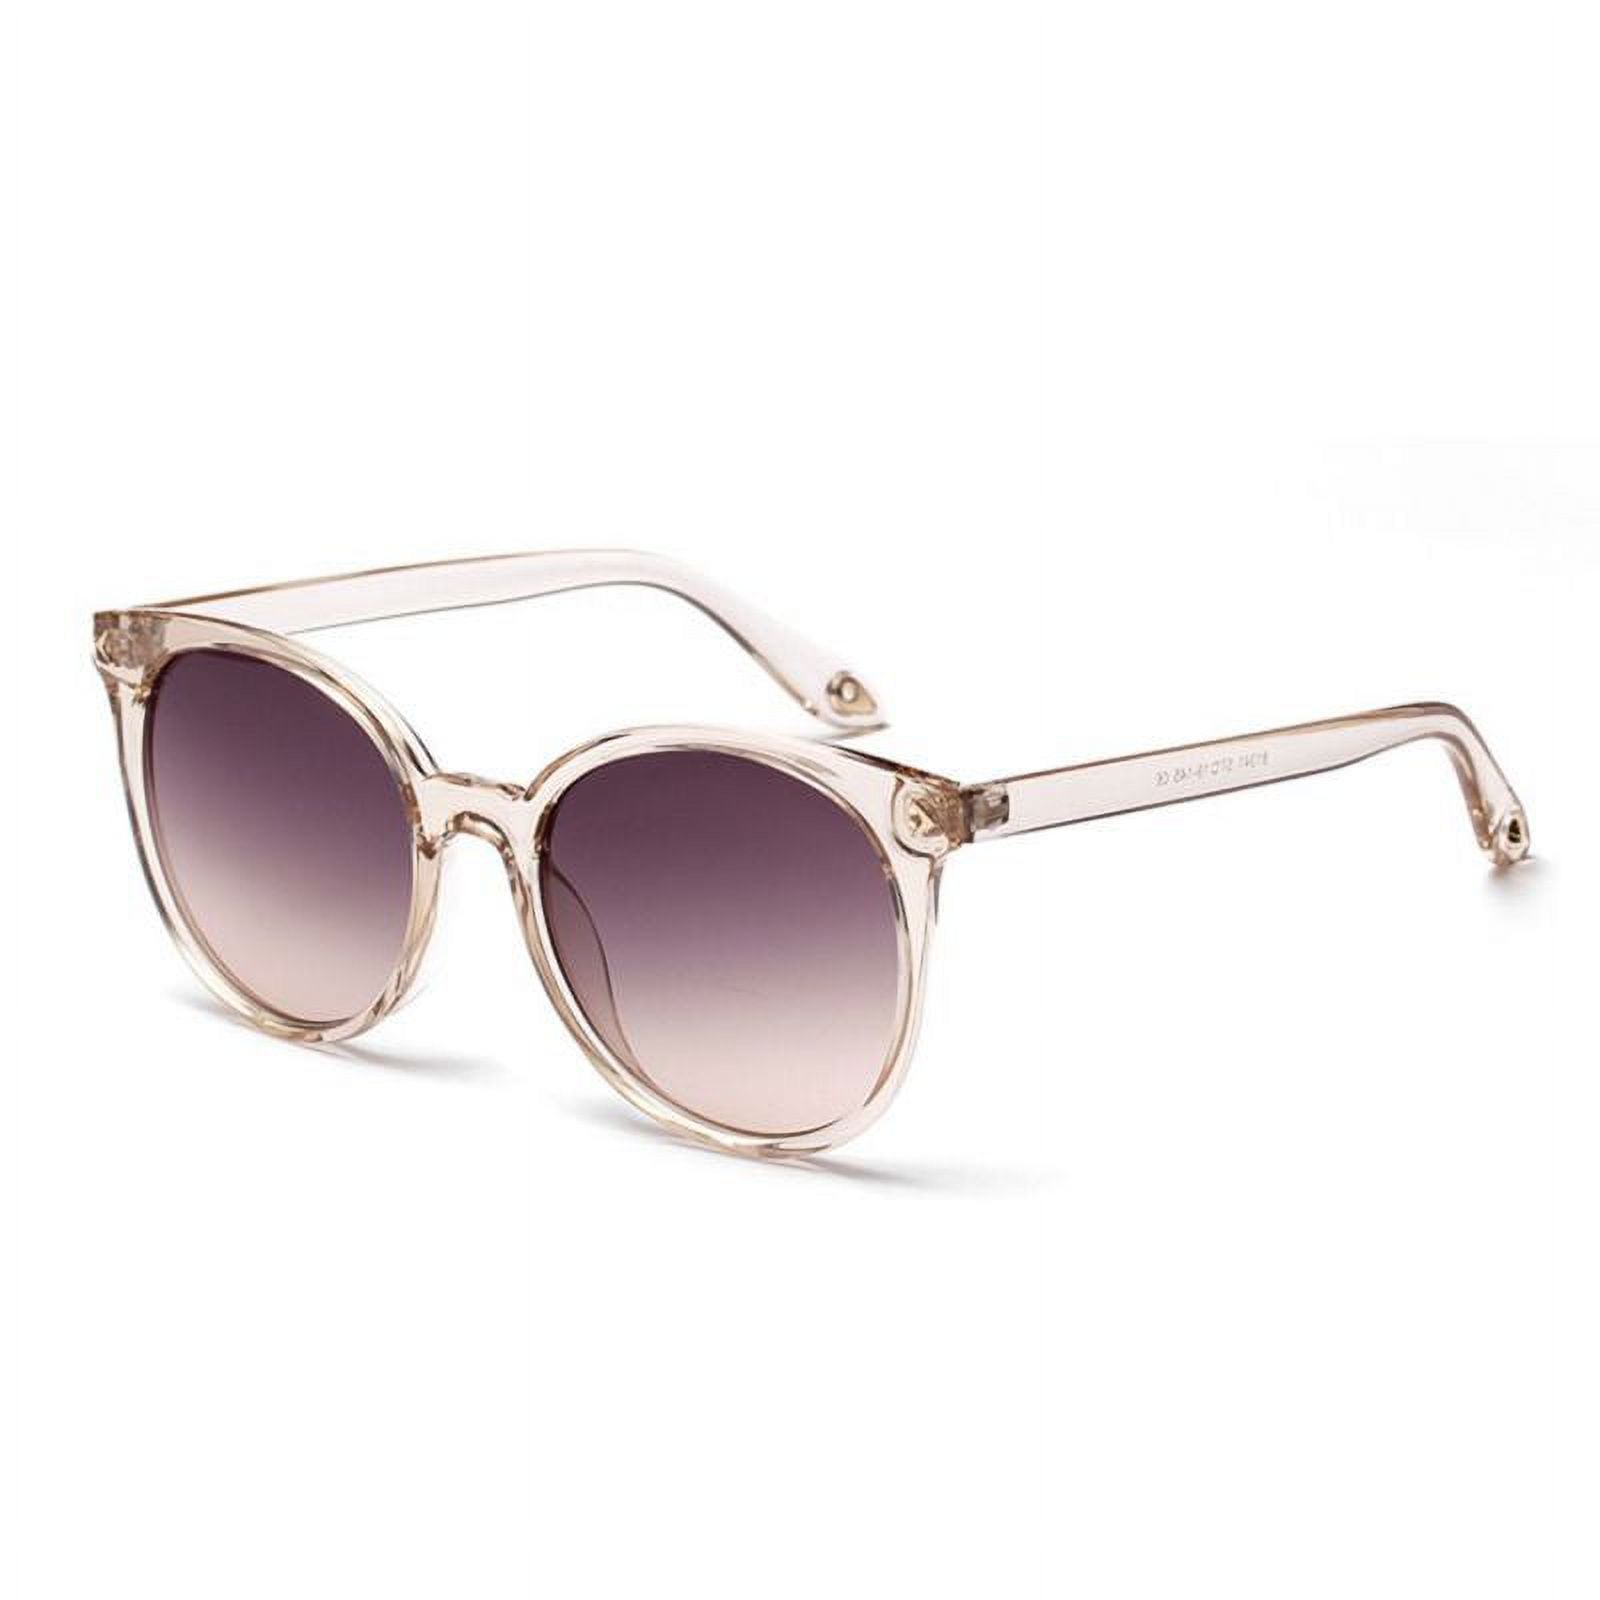 Retro Round Transparent Frame Sunglasses Women Men Brand Designer Sun Glasses for Women Alloy Mirror,Coffee - image 1 of 3